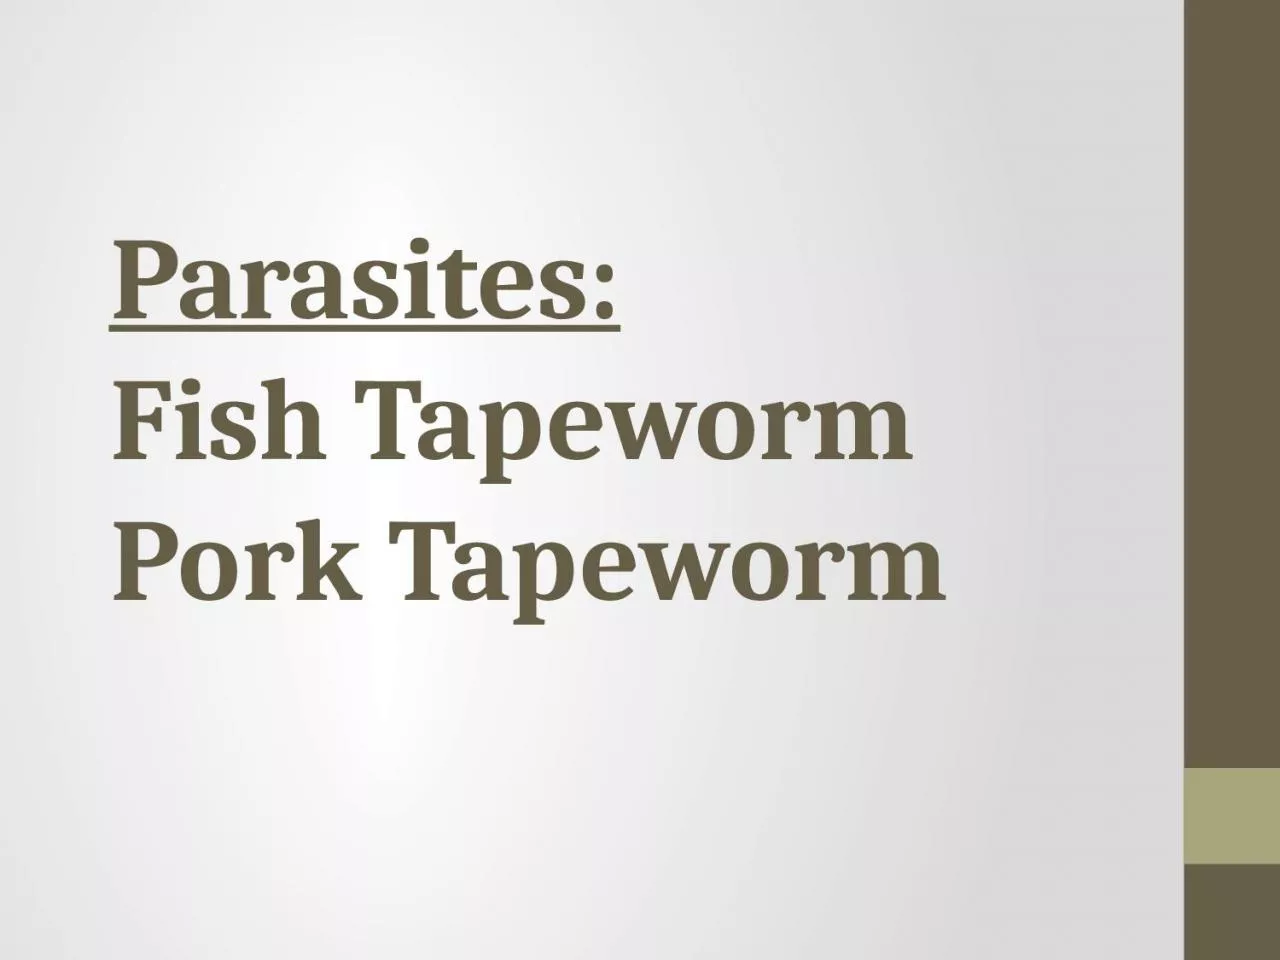 Parasites: Fish Tapeworm